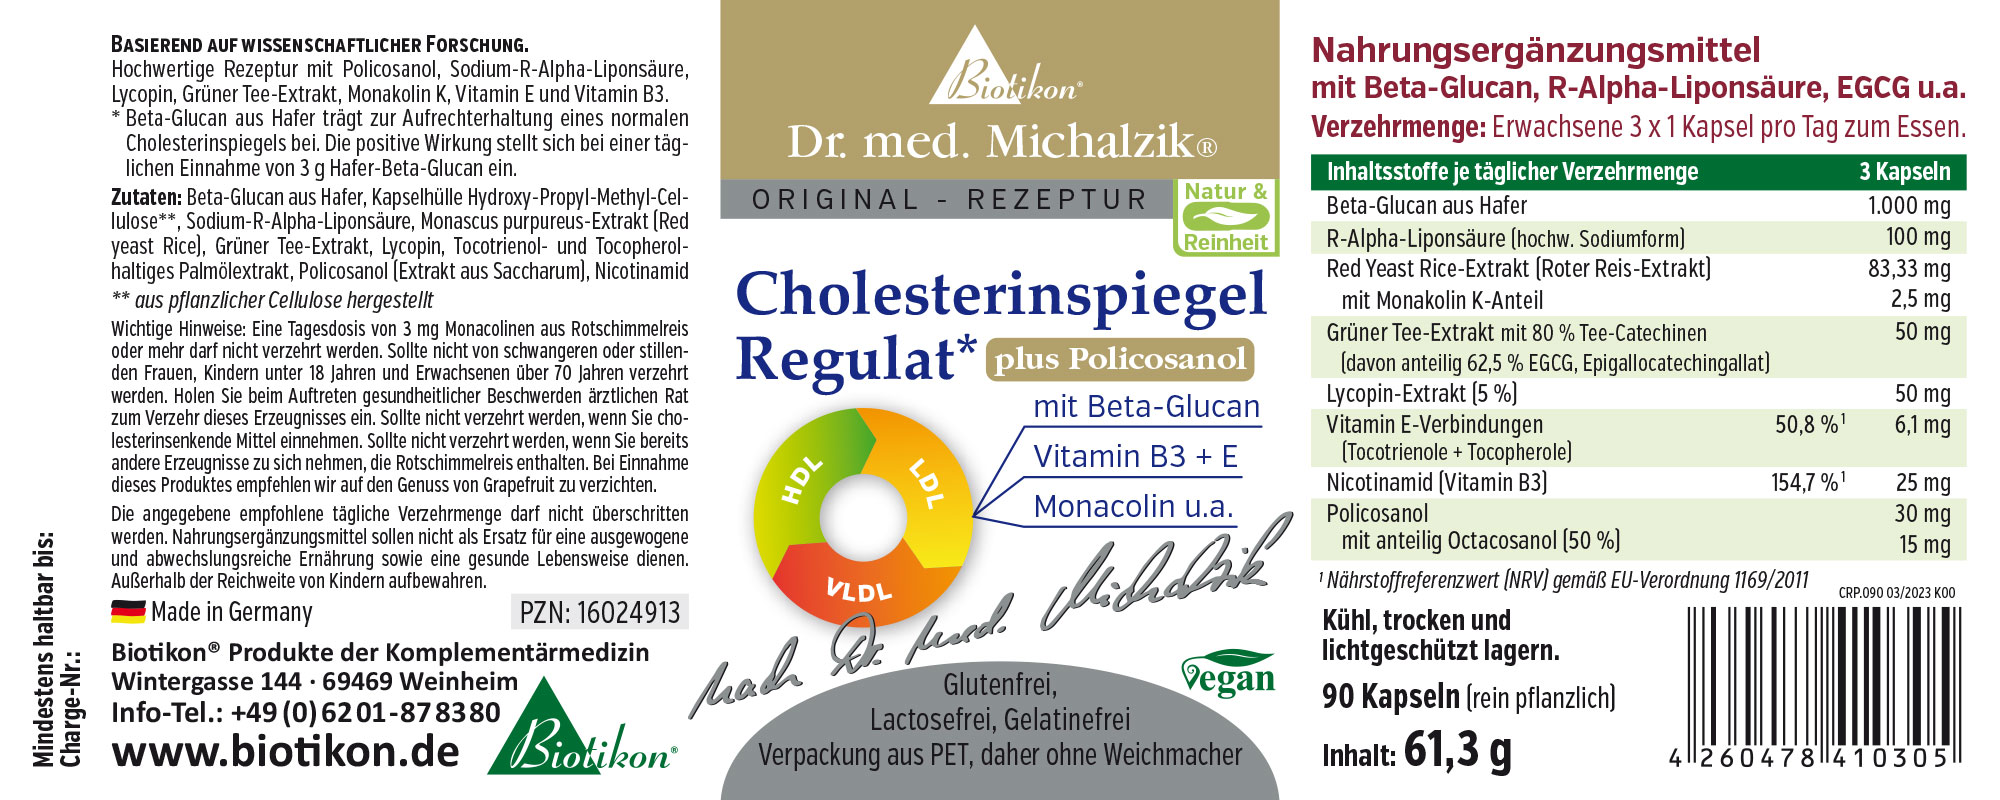 Cholesterol Level Regulator with Policosanol